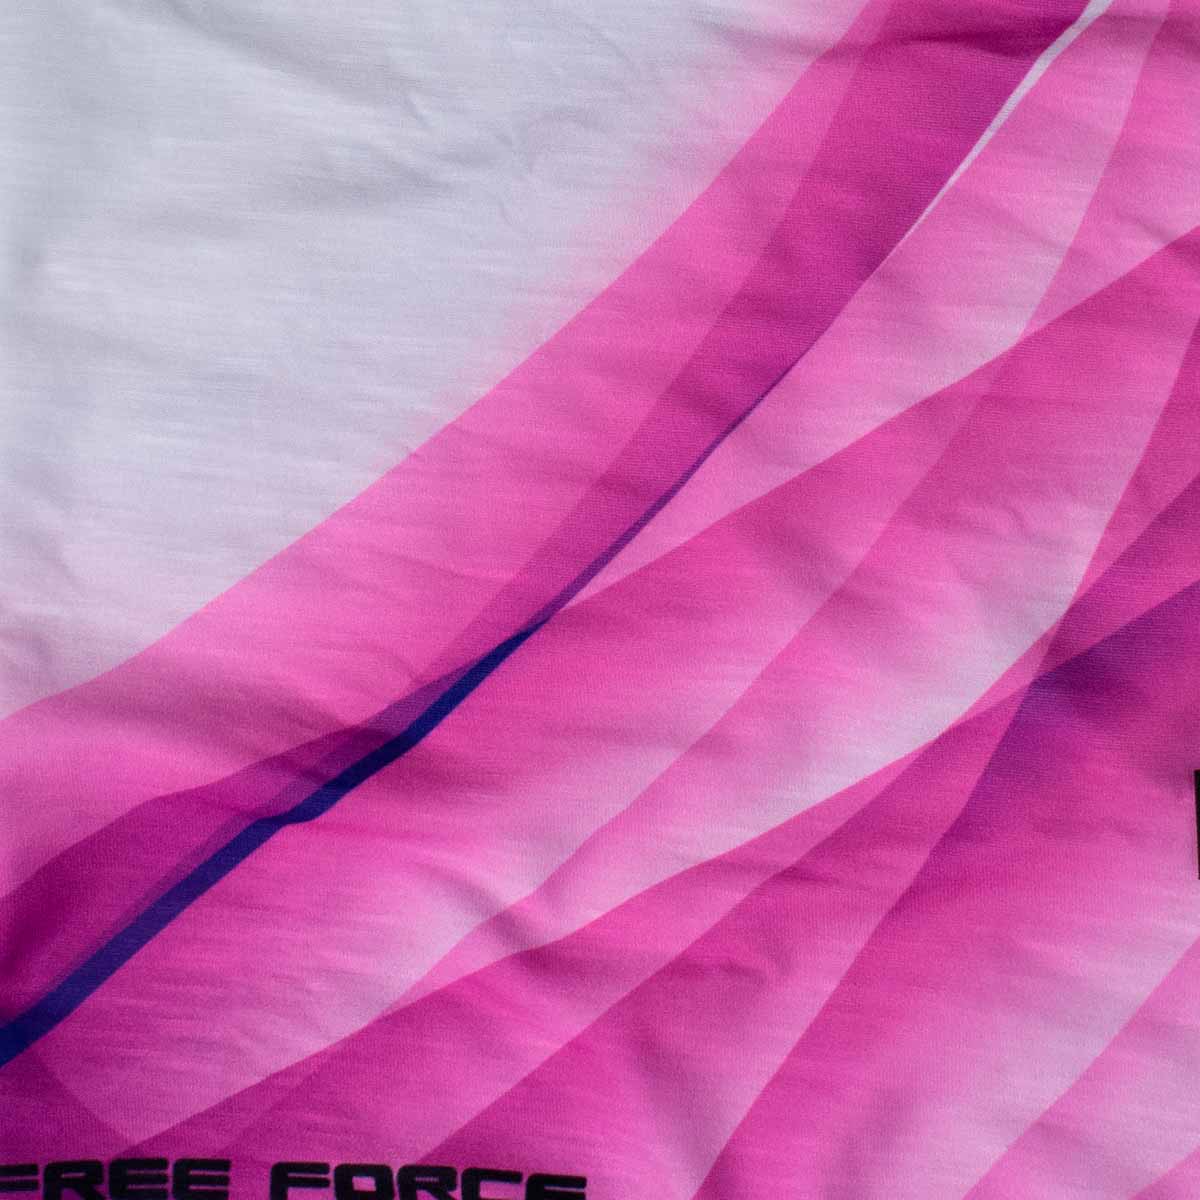 Bandana Freeforce Violet Rosa e Preta Tubular Ciclismo 22